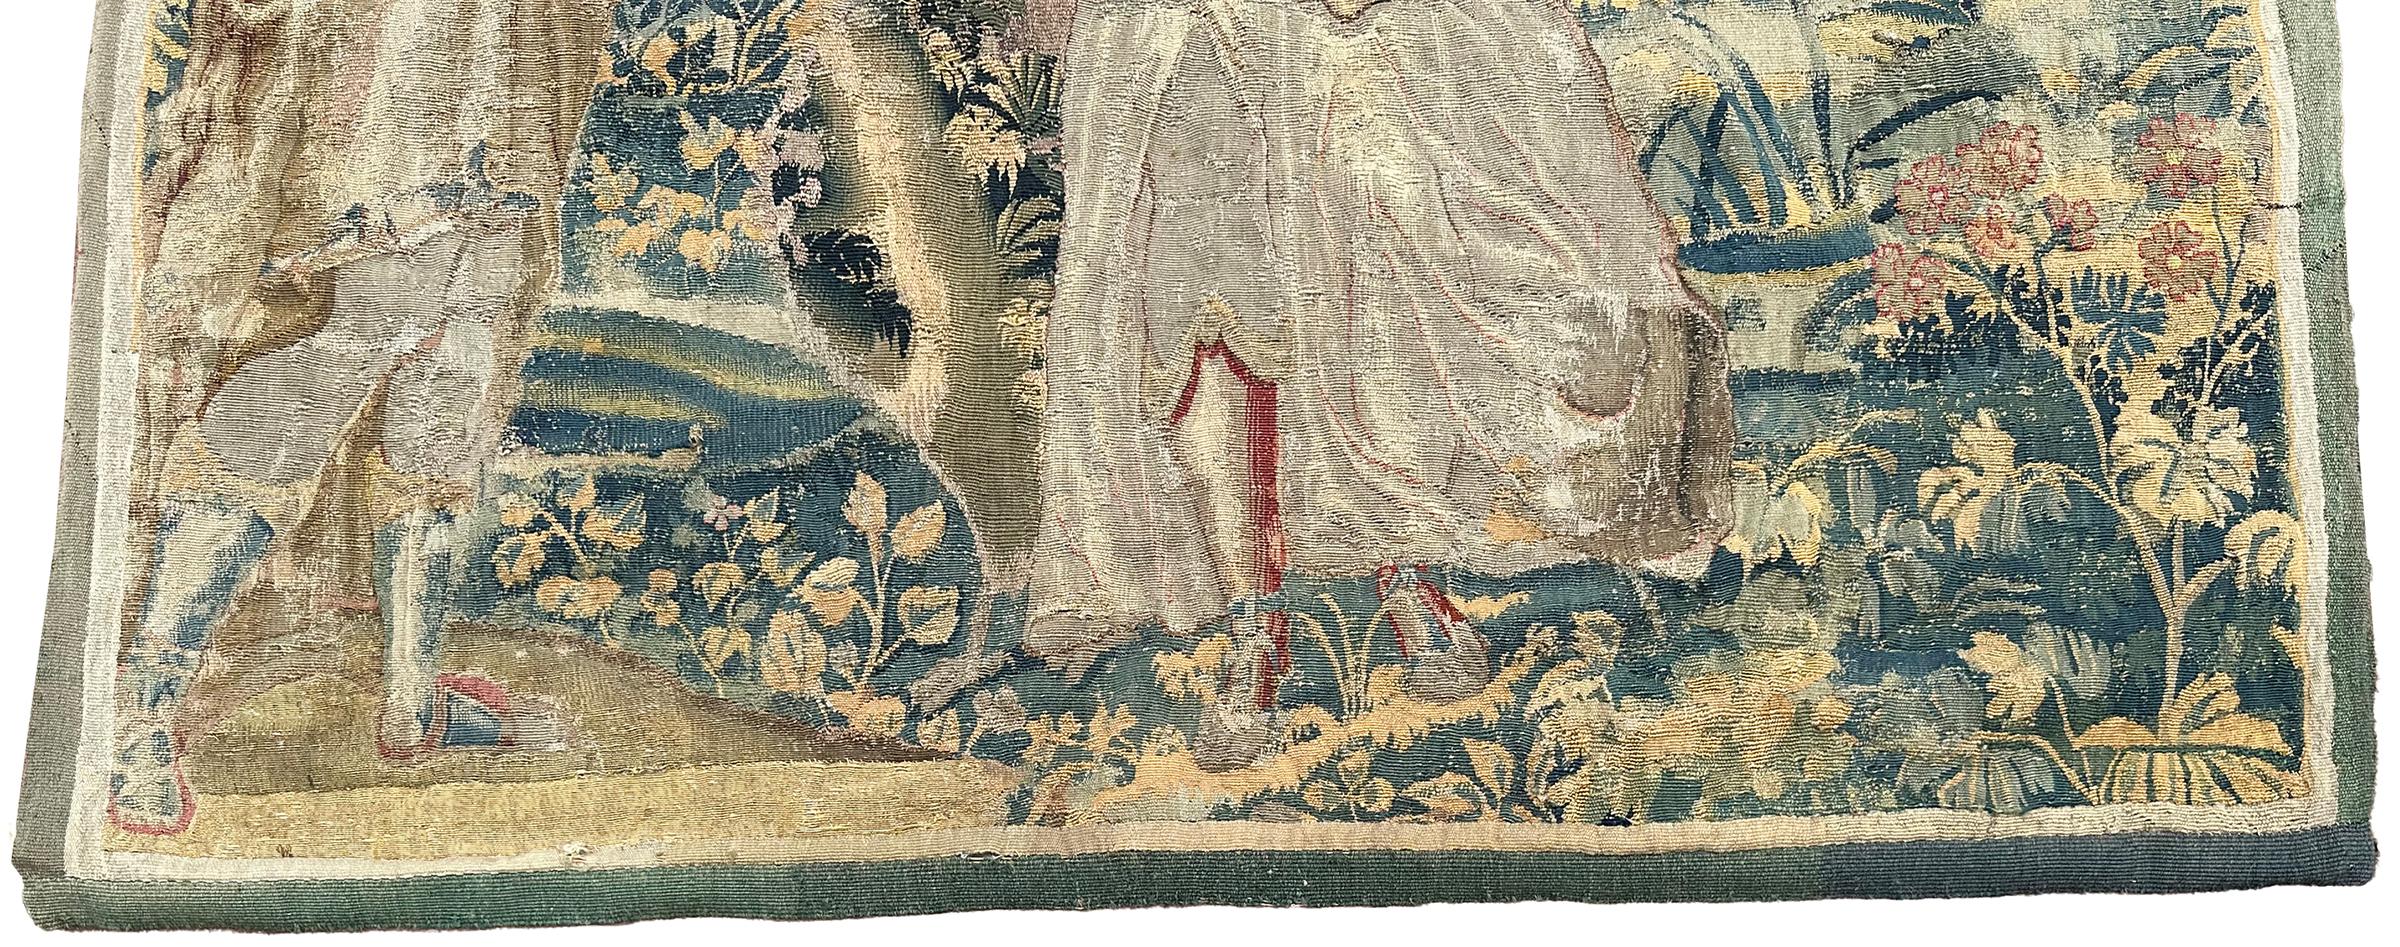 Hand-Woven 17th century Antique Flemish Tapestry Wool & Silk Verdure Art Nouveau 4x6ft For Sale